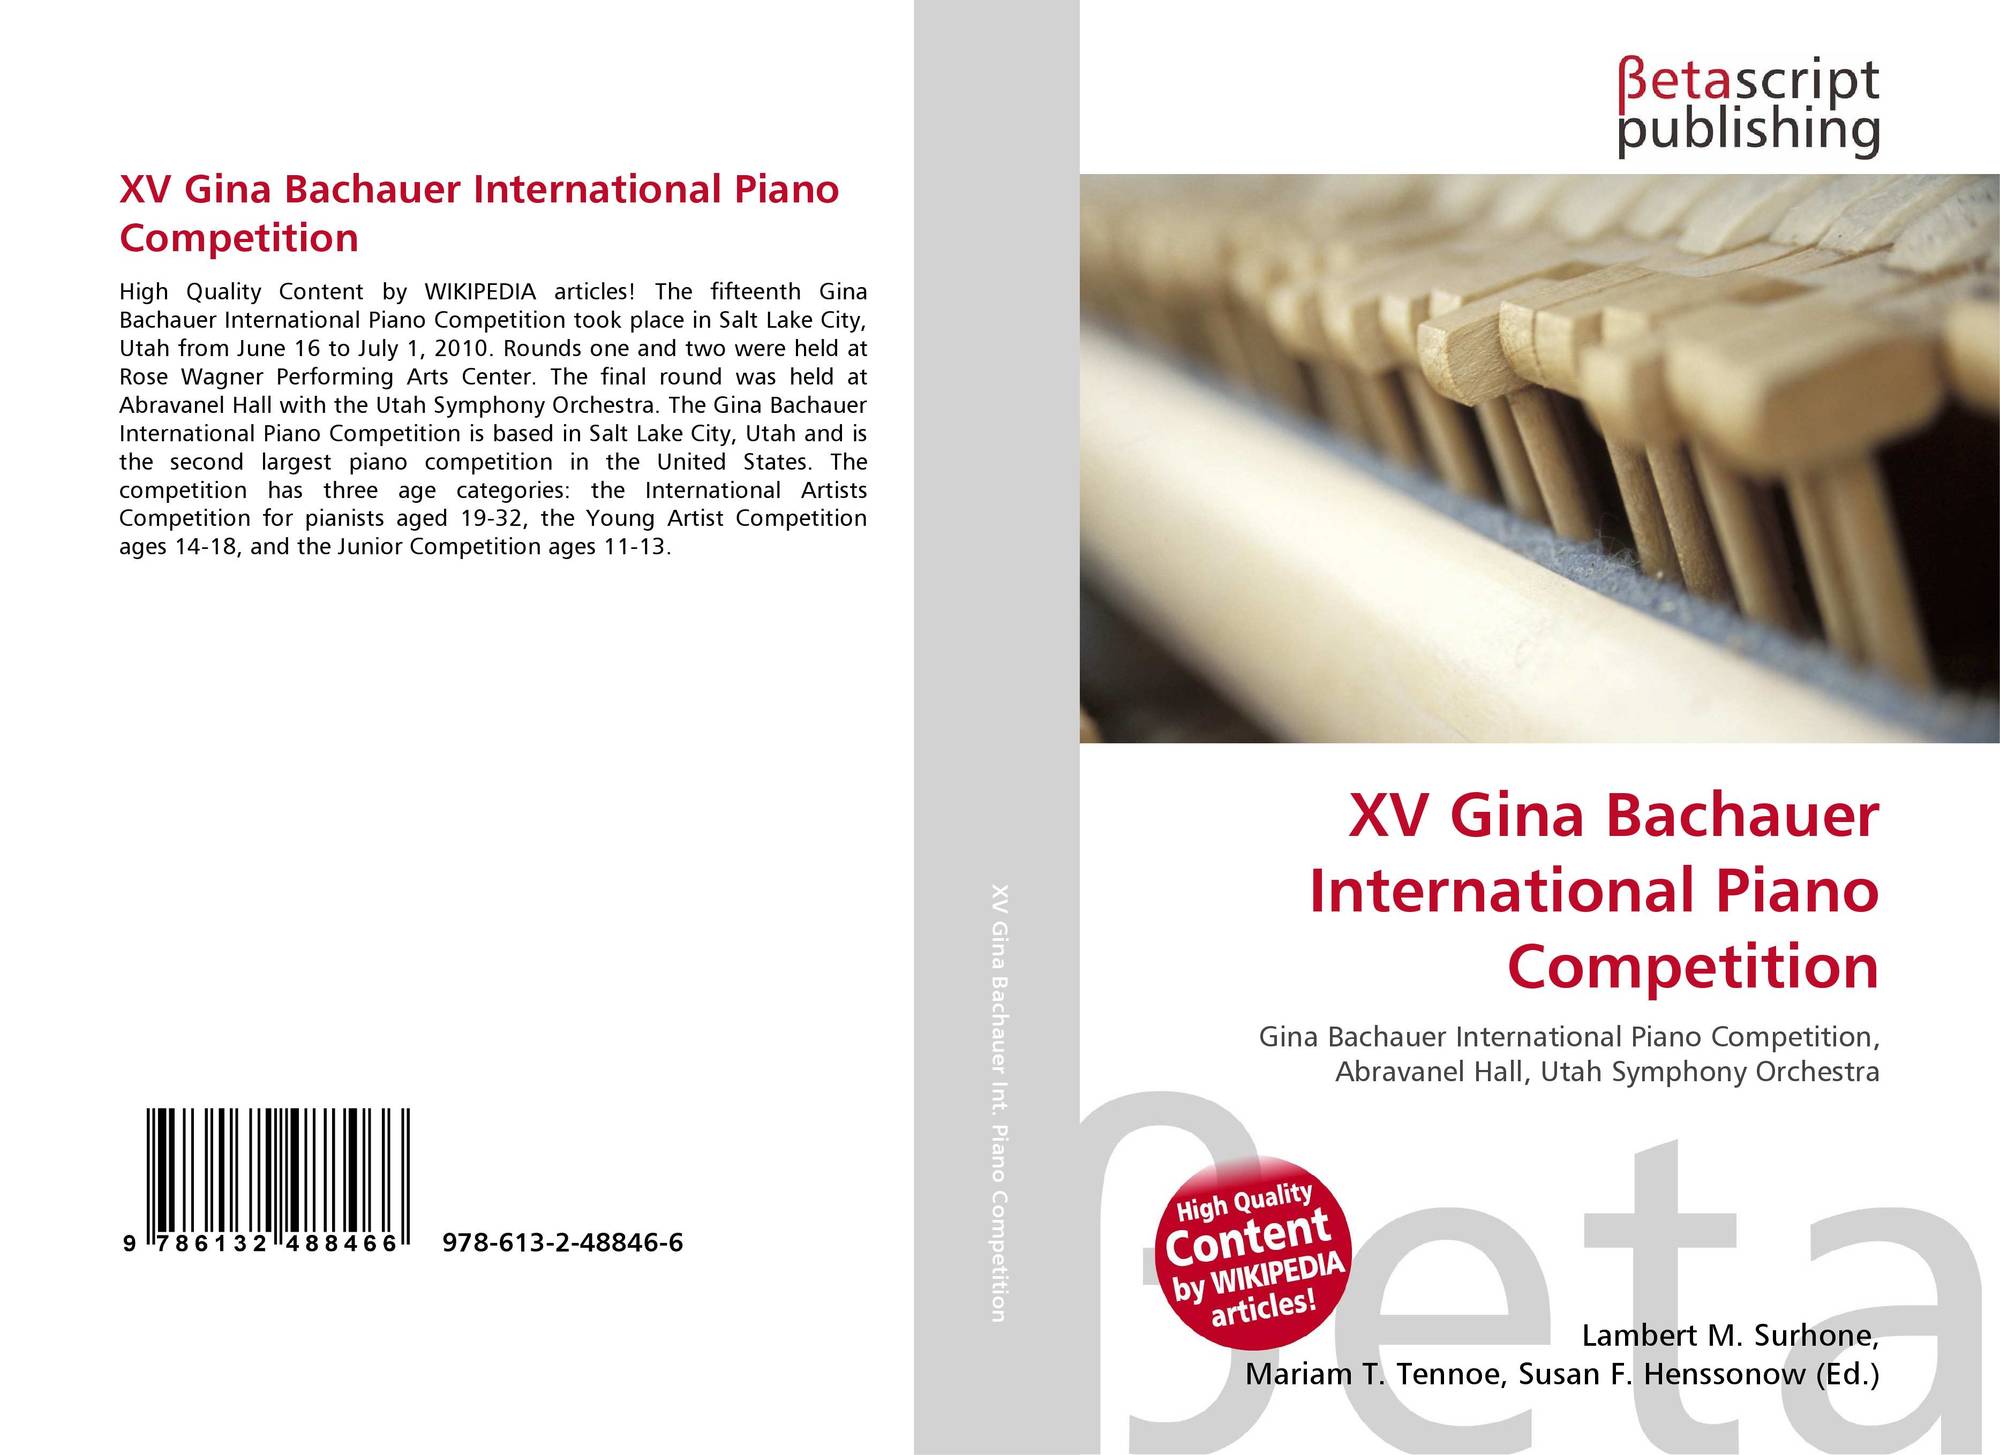 XV Gina Bachauer International Piano Competition, 9786132488466